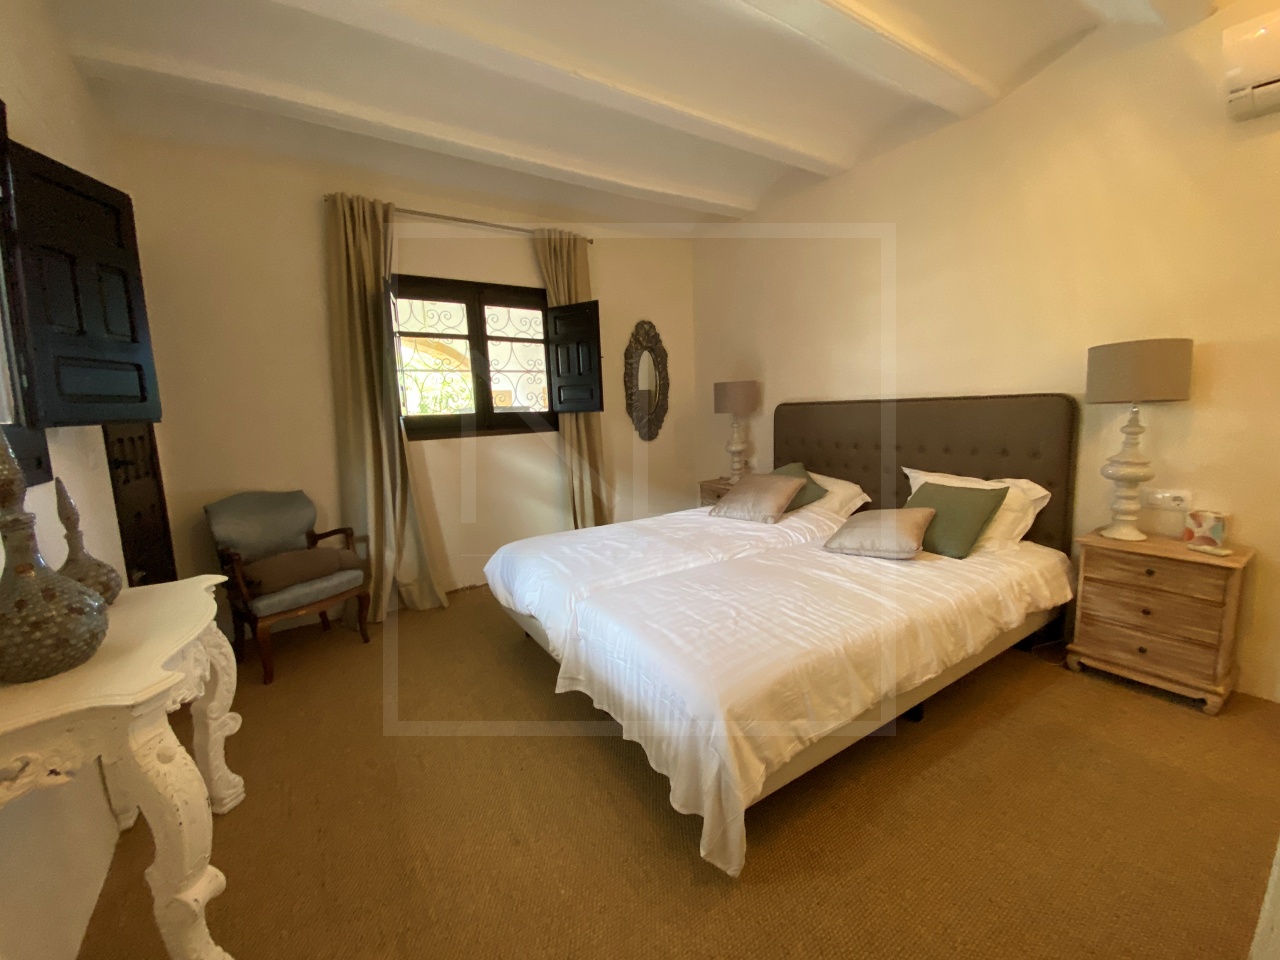 8 bedroom, 4 bathroom, Villa For Sale in Javea